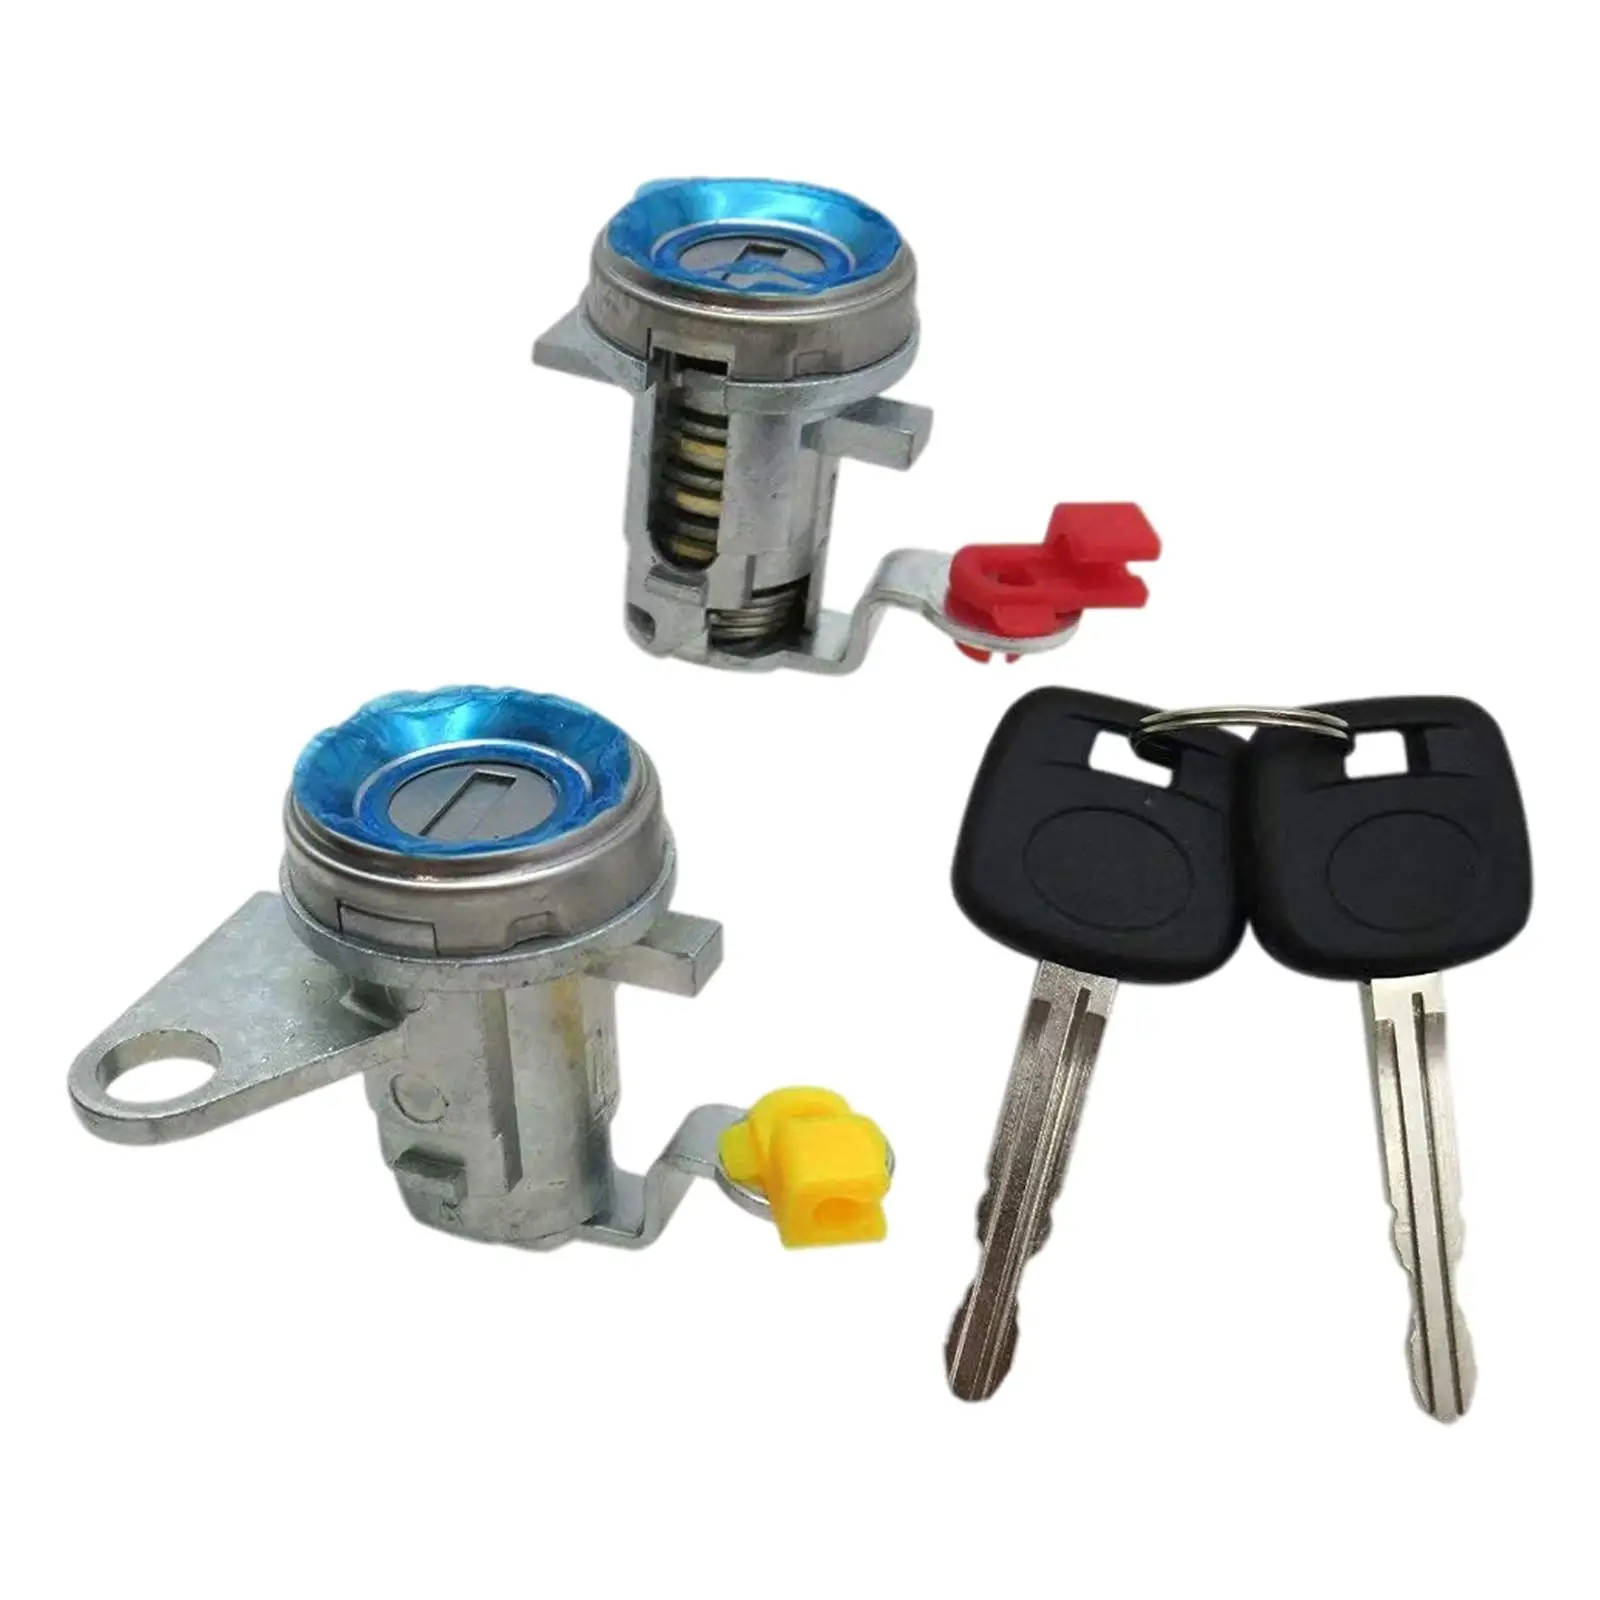 DL-107 DL108R 2 Pieces Car Door Lock Cylinder Set with Keys Fits for    95-14 6905135070 6905235070 Vehicle Parts